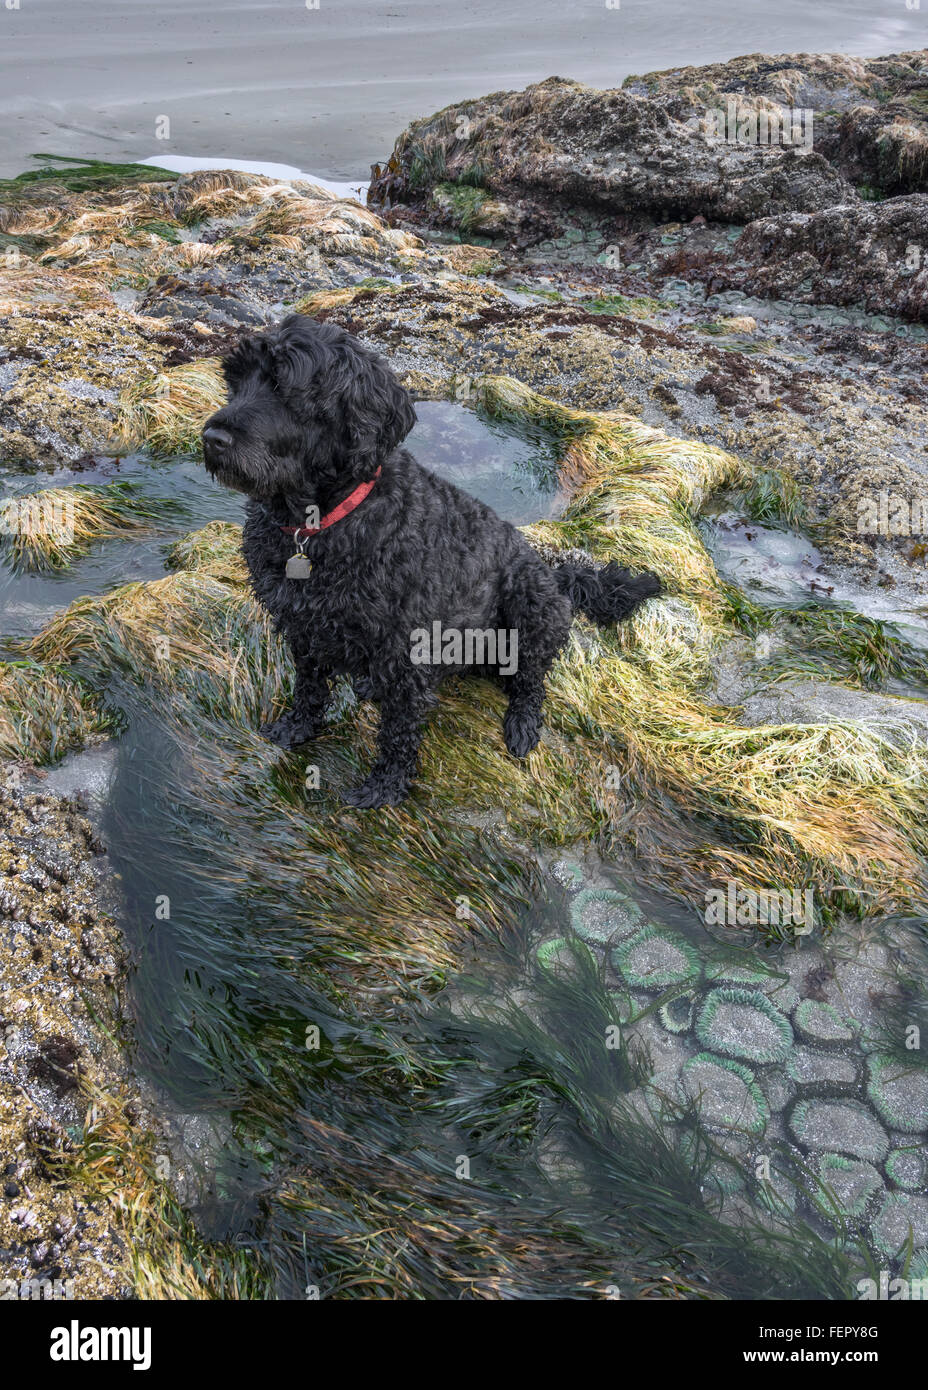 Portuguese Water Dog with sea life, Chesterman Beach, Tofino, British Columbia Stock Photo